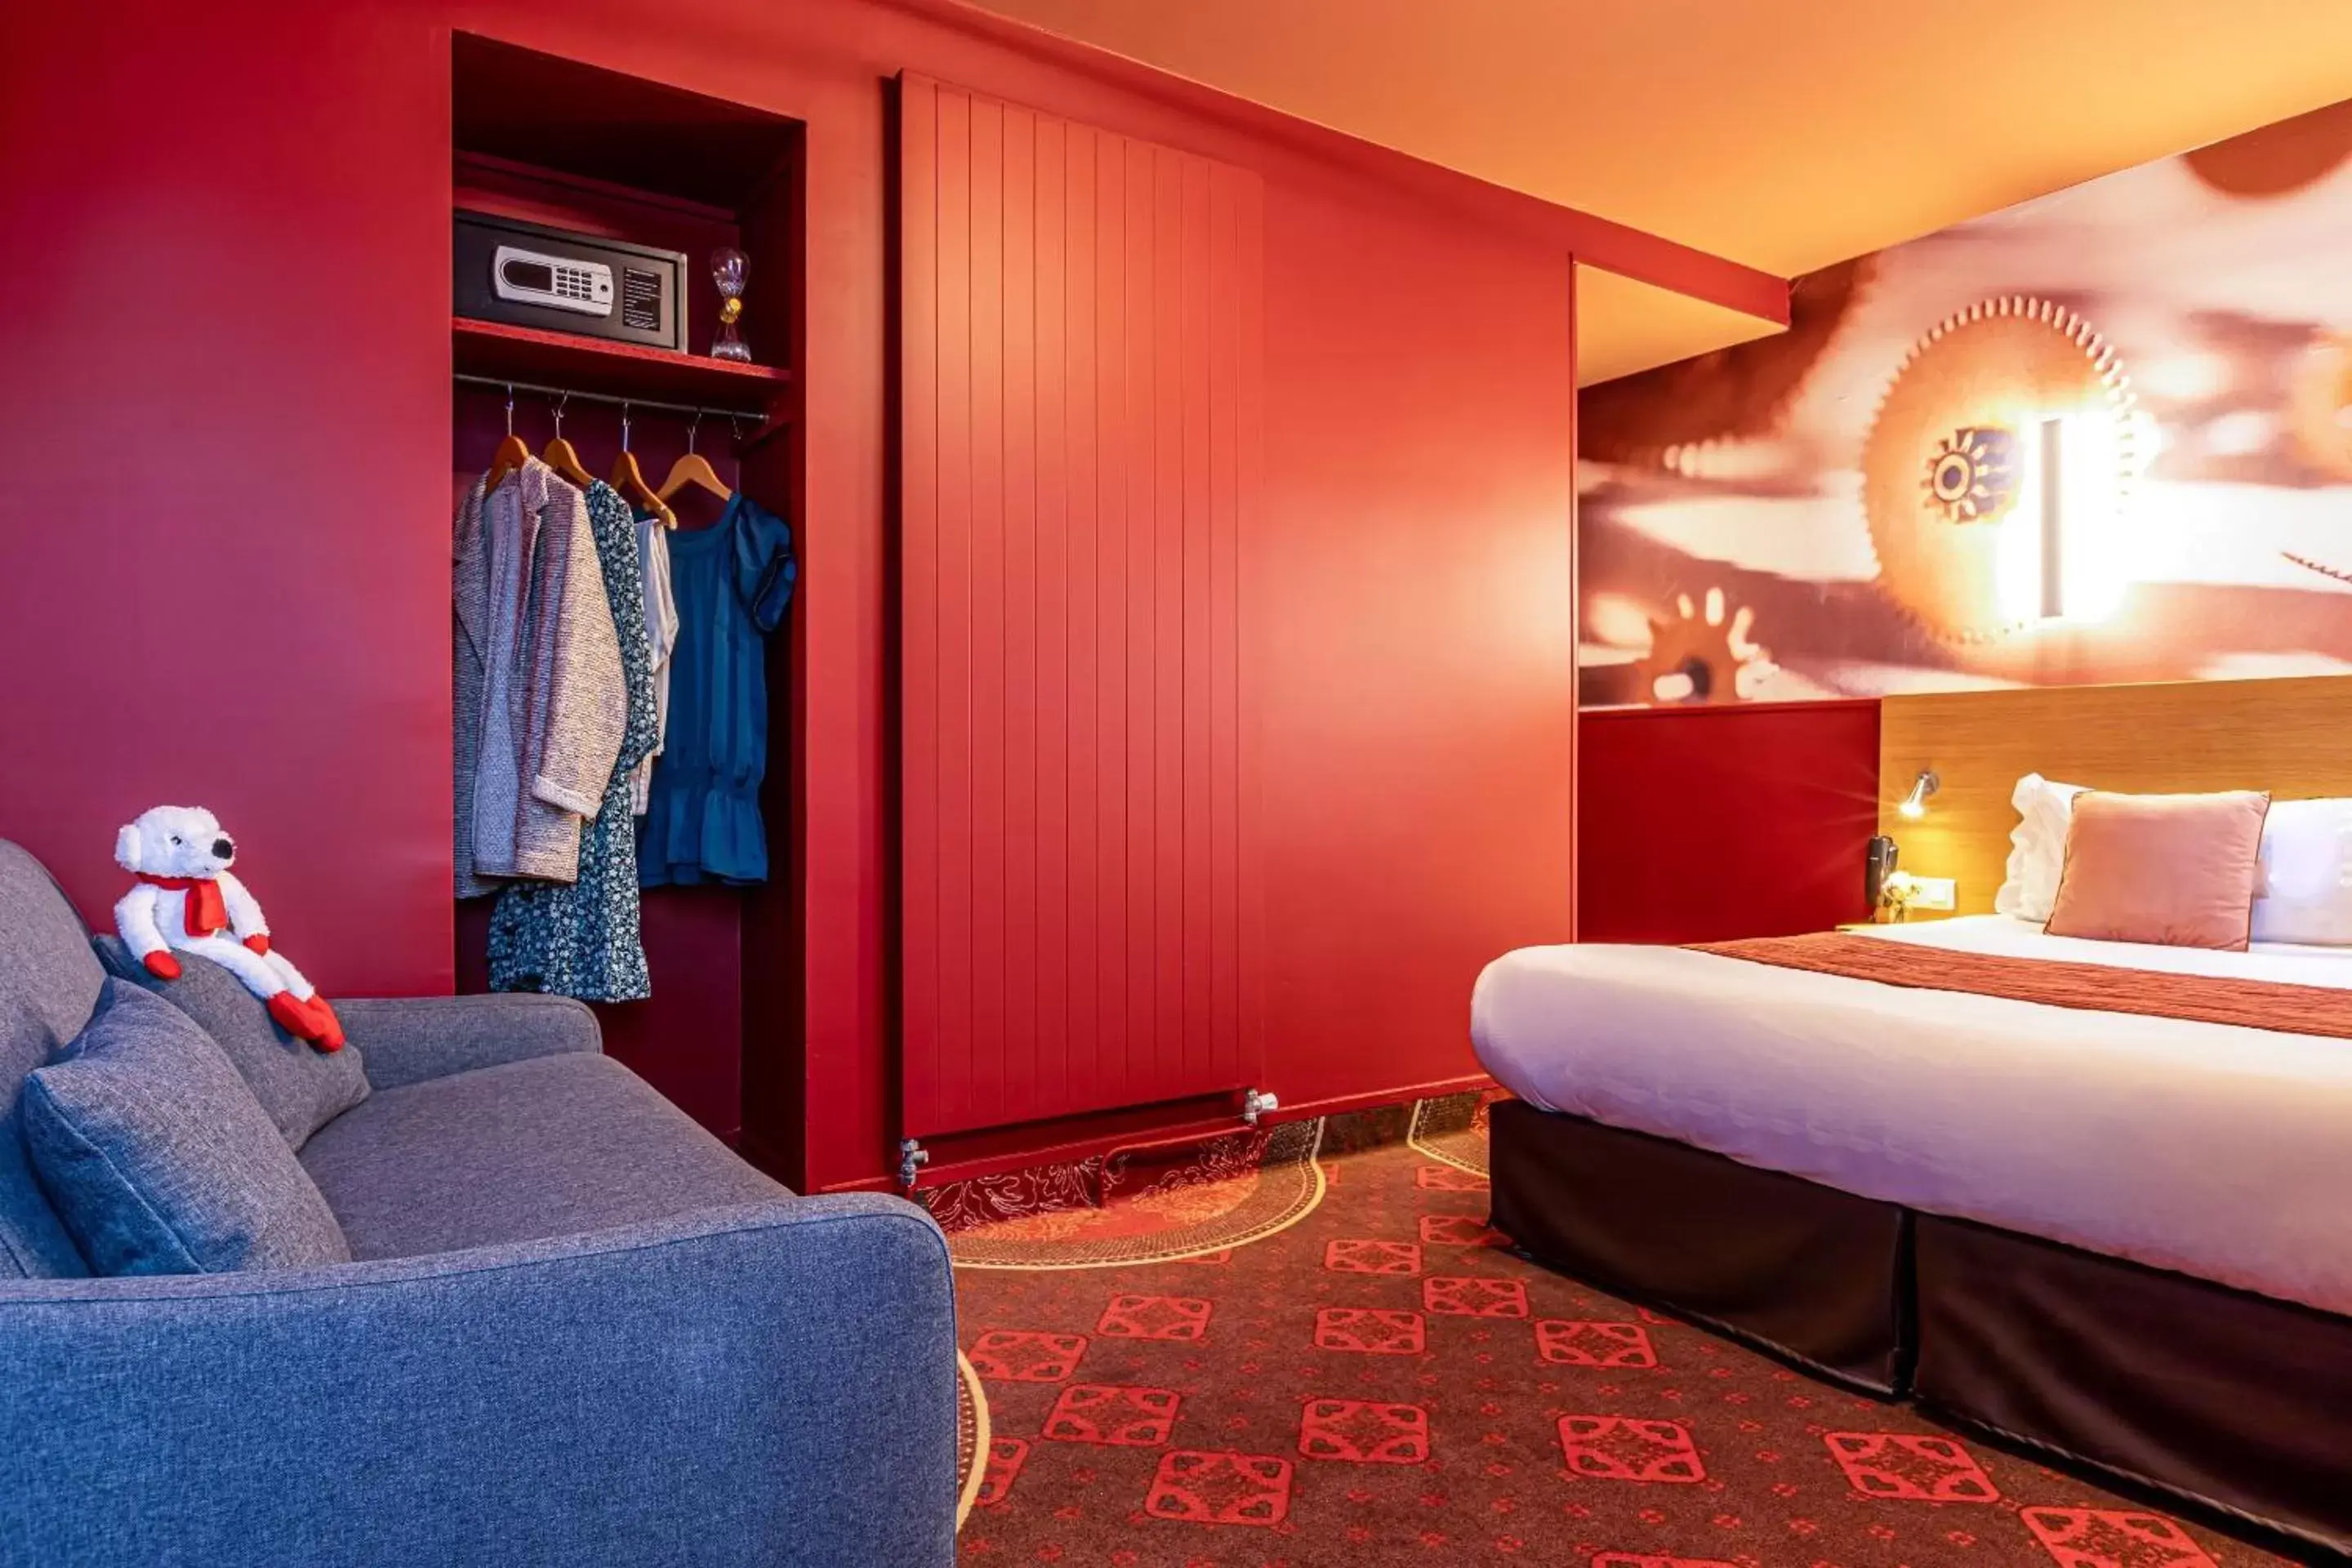 Bed in Hotel Ariane Montparnasse by Patrick Hayat